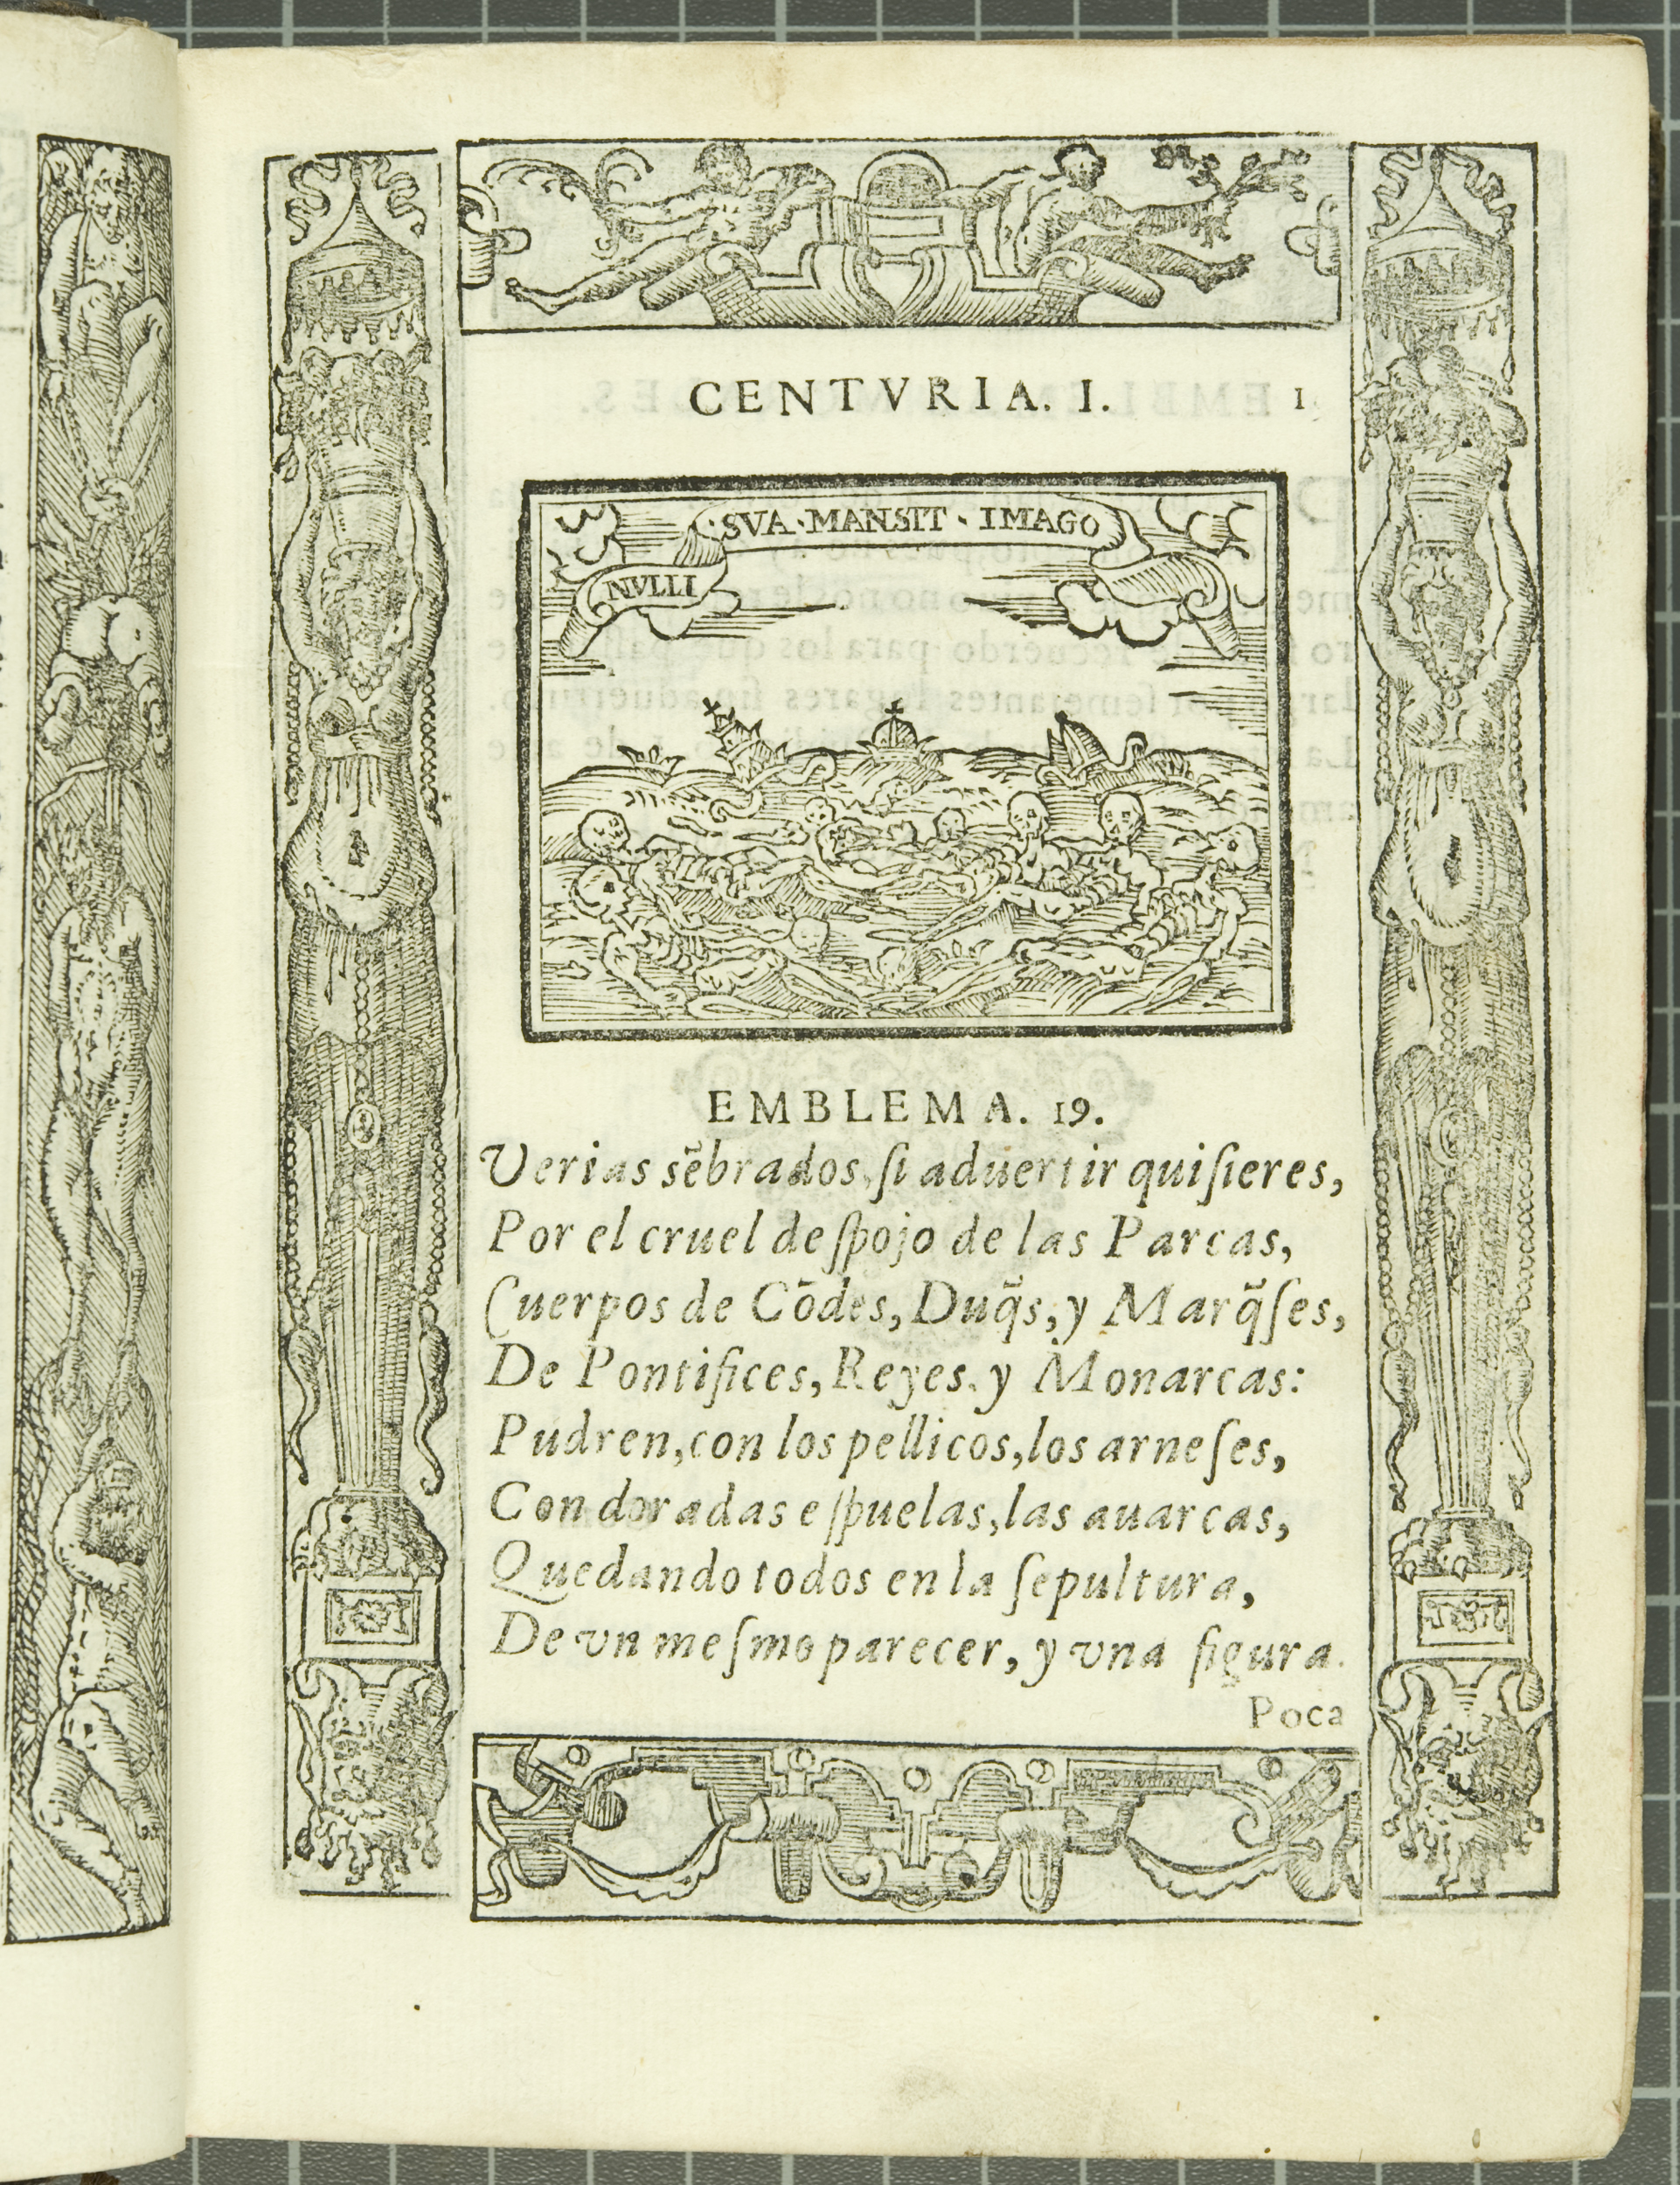 Emblem 19: "Nulli sua mansit imago" (None kept his own image), from Covarrubias’s Emblemas morales (1610).